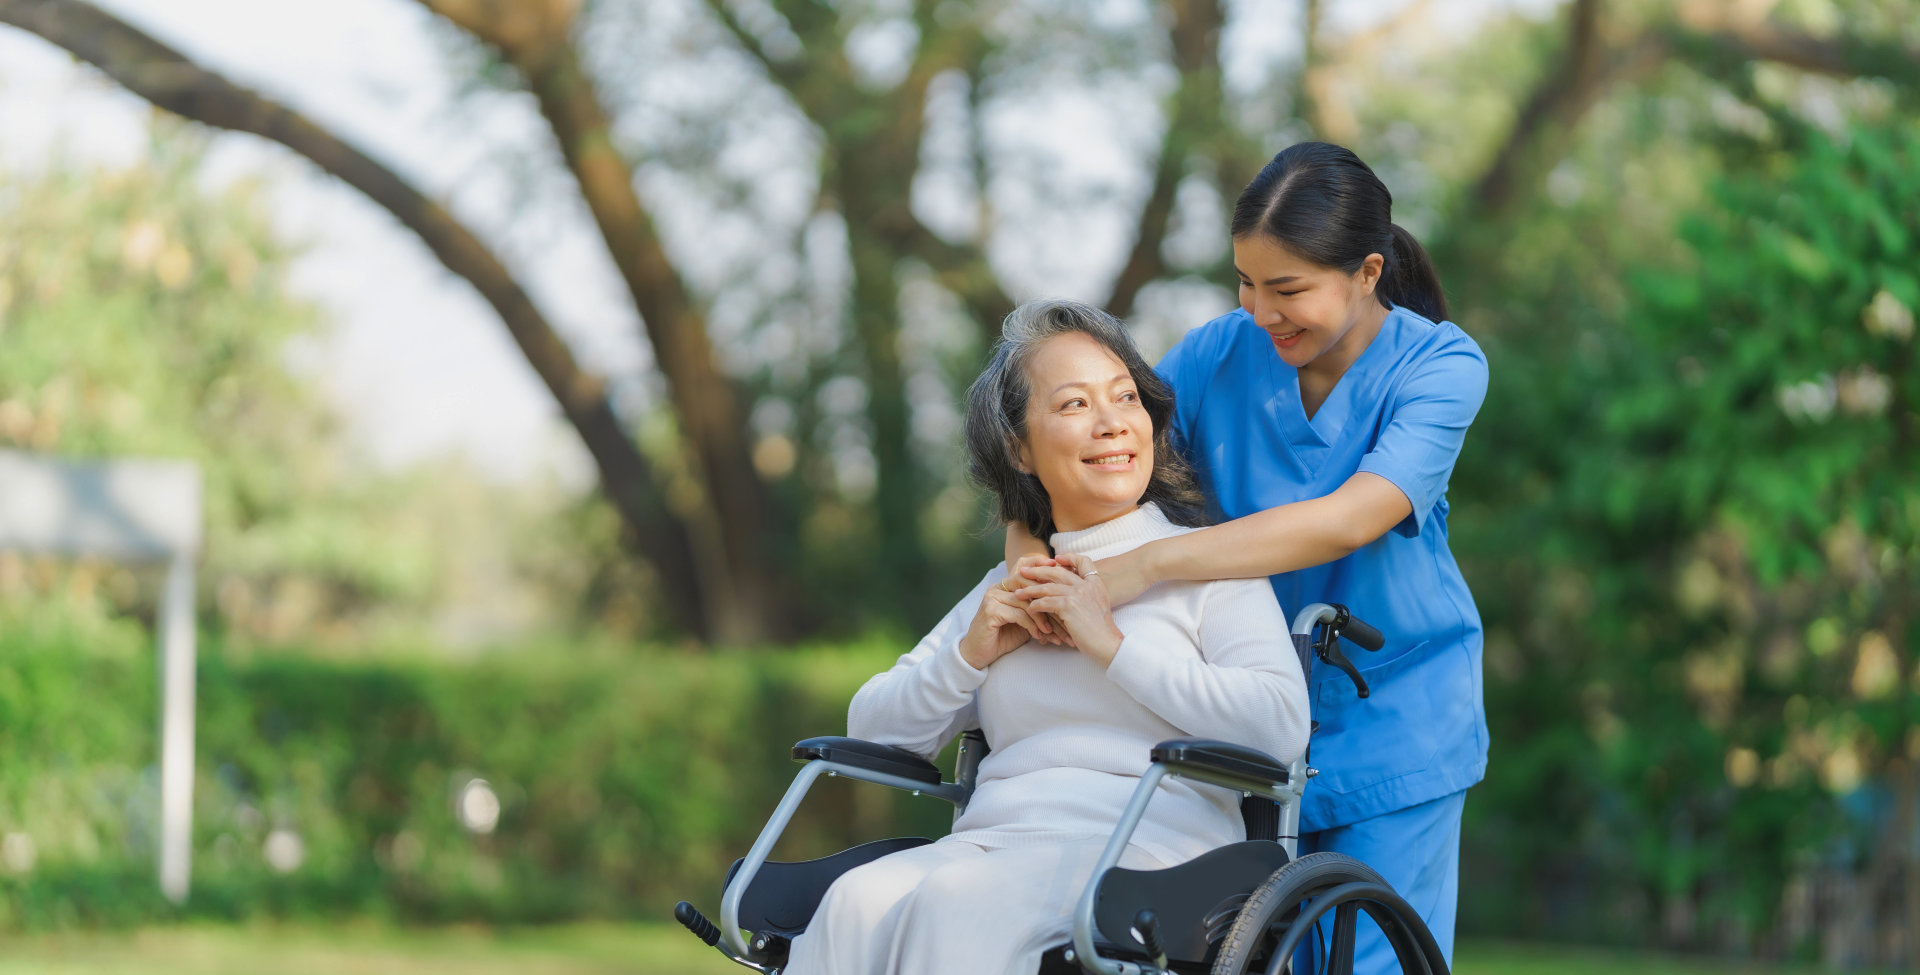 caregiver assist the needs of her patient